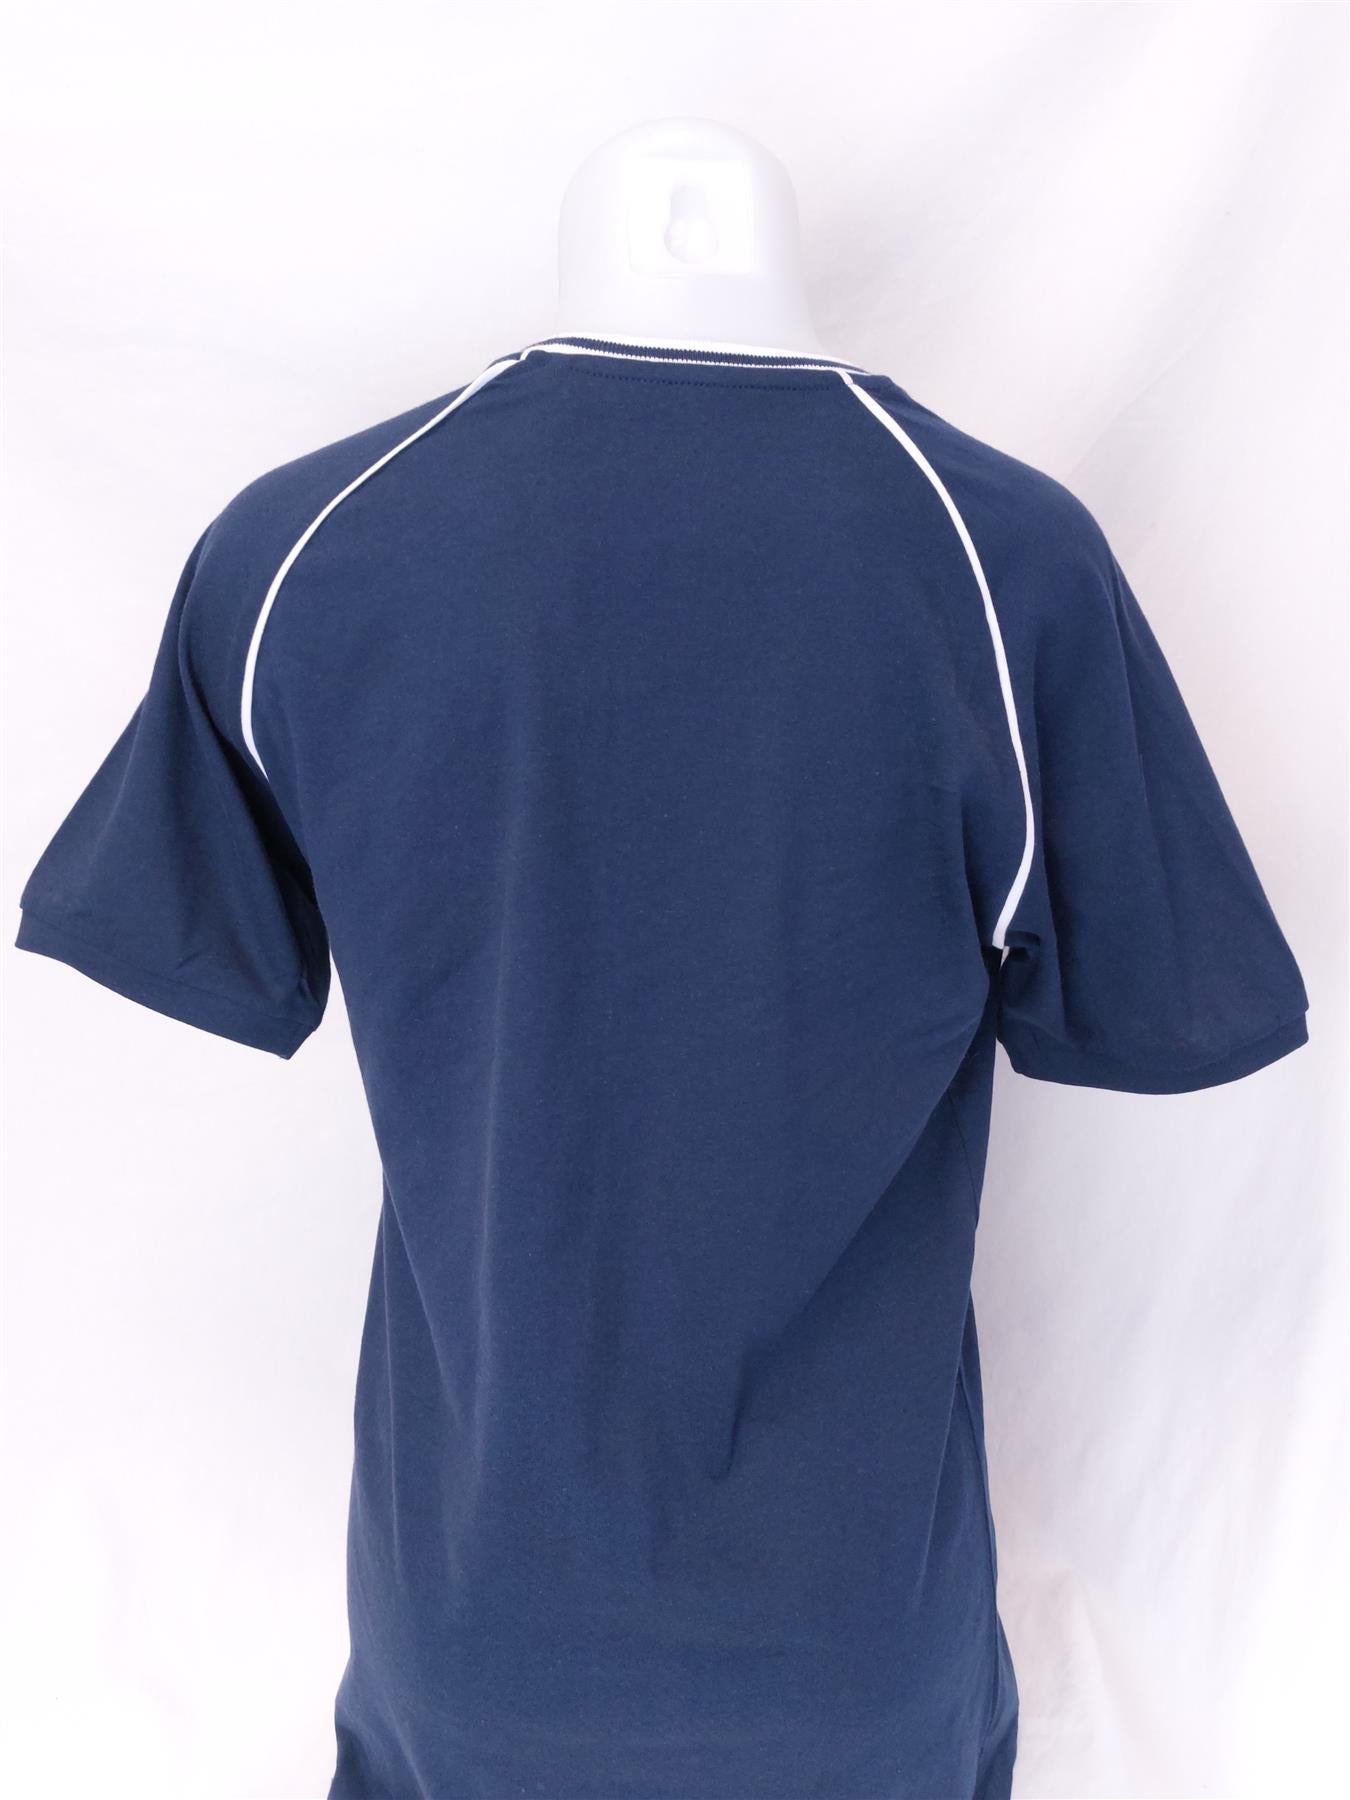 Scotland Men's Sport V-Neck T-Shirt Top Pure Cotton Unofficial Supporter Top Brand New